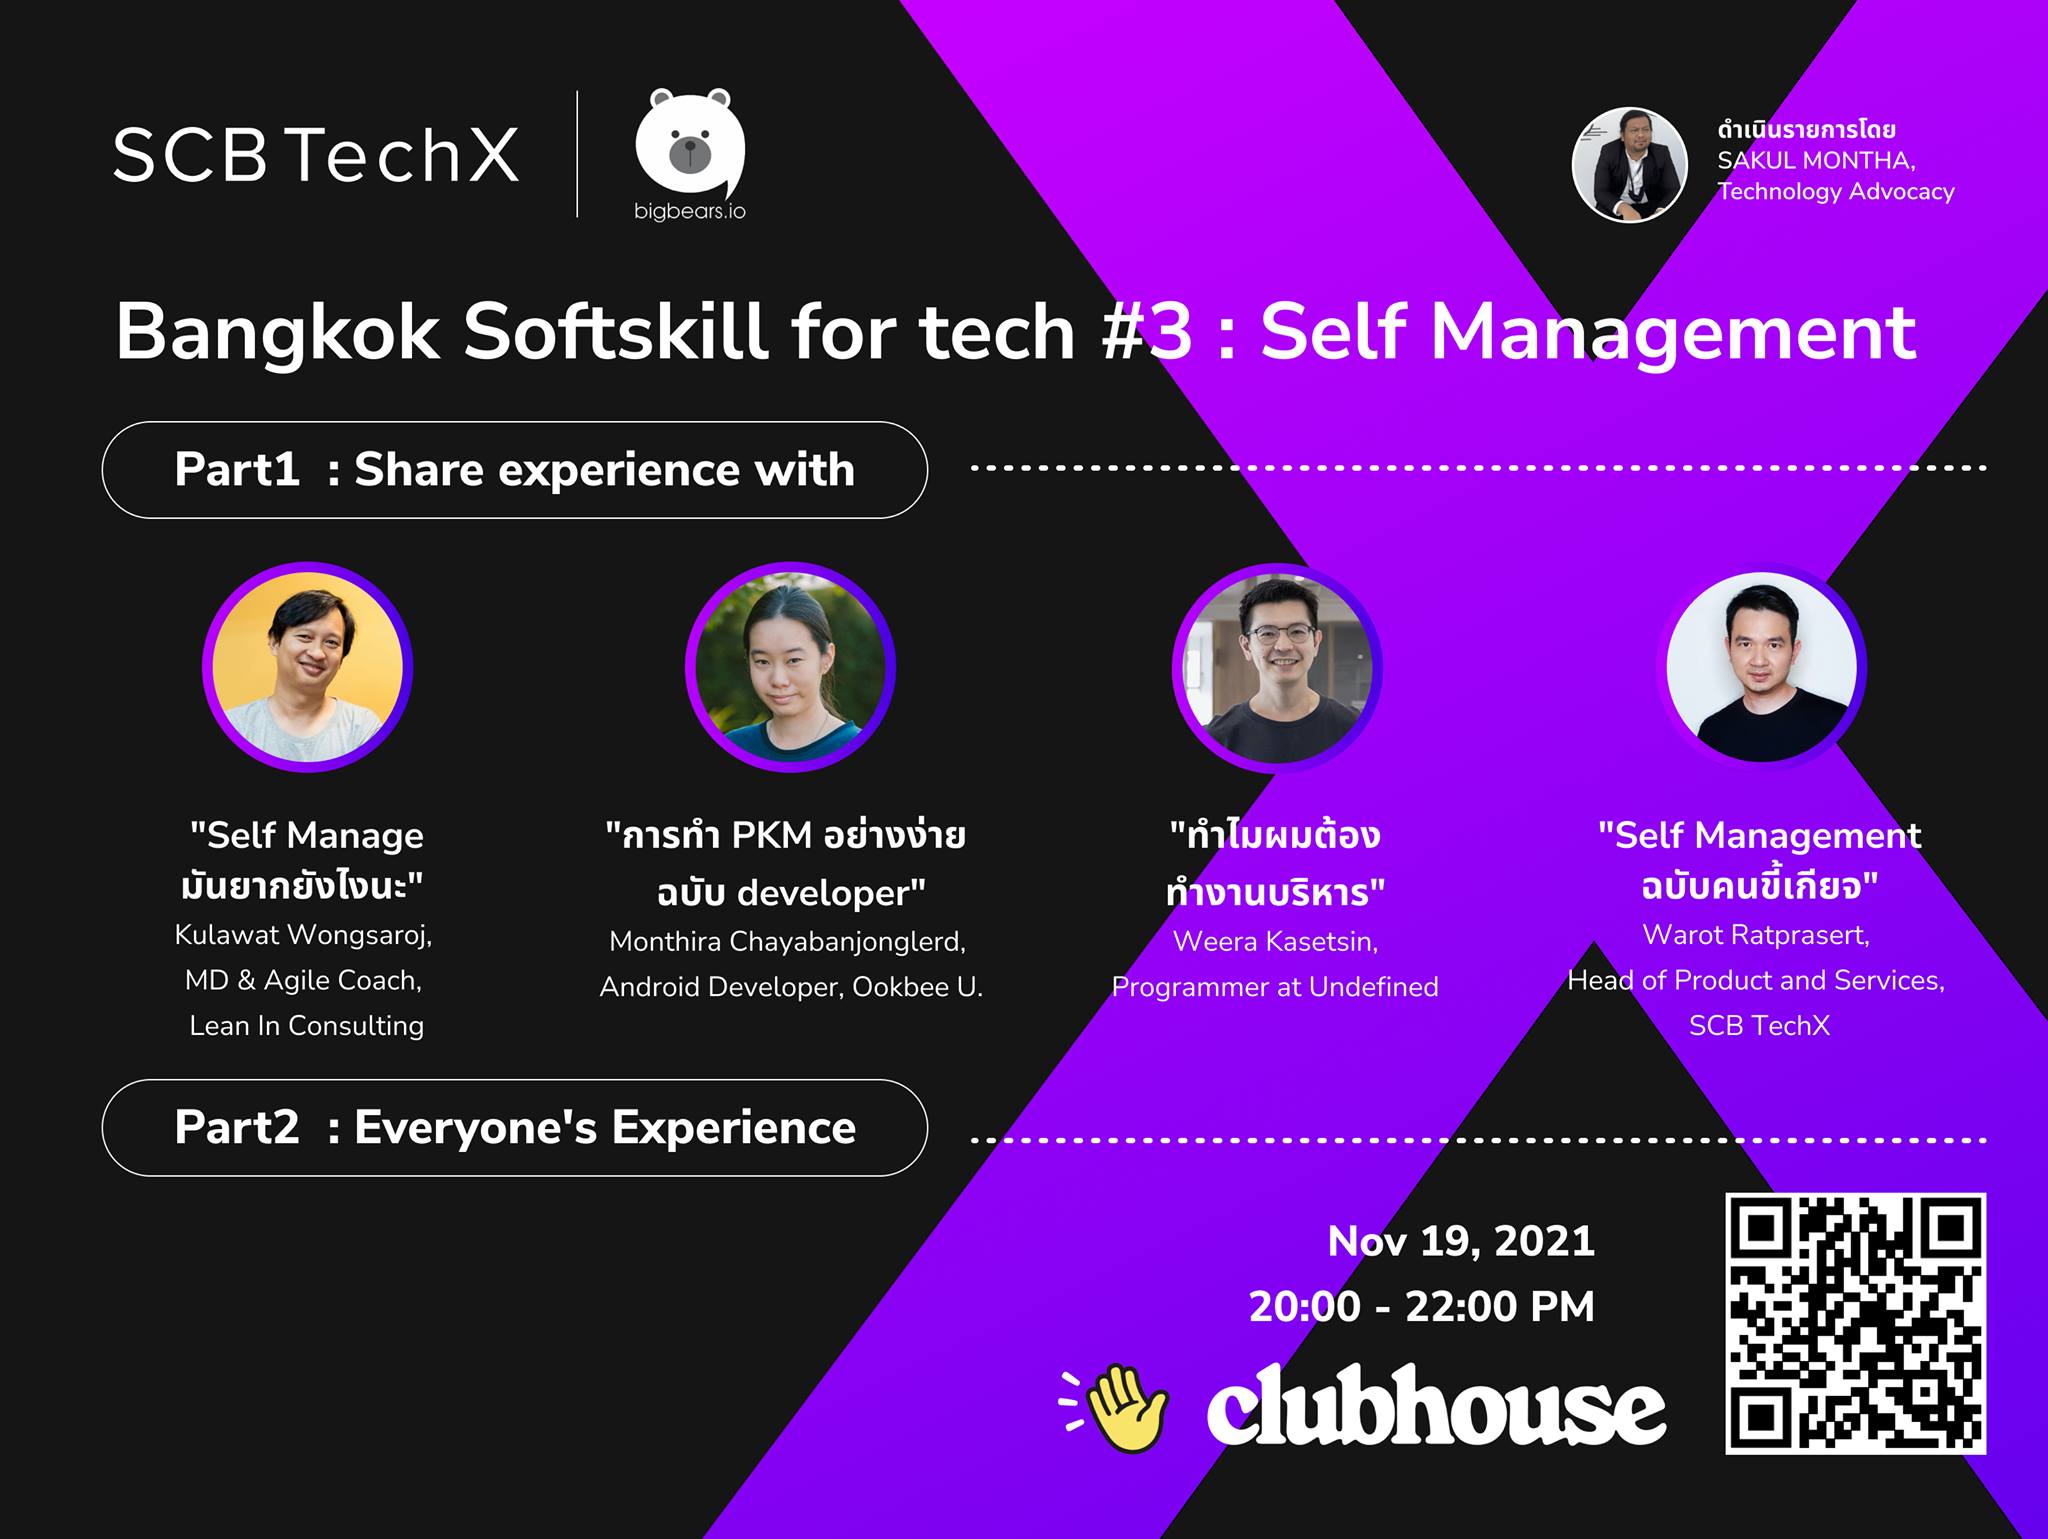 Bangkok Softskill for Tech #3: Self Management